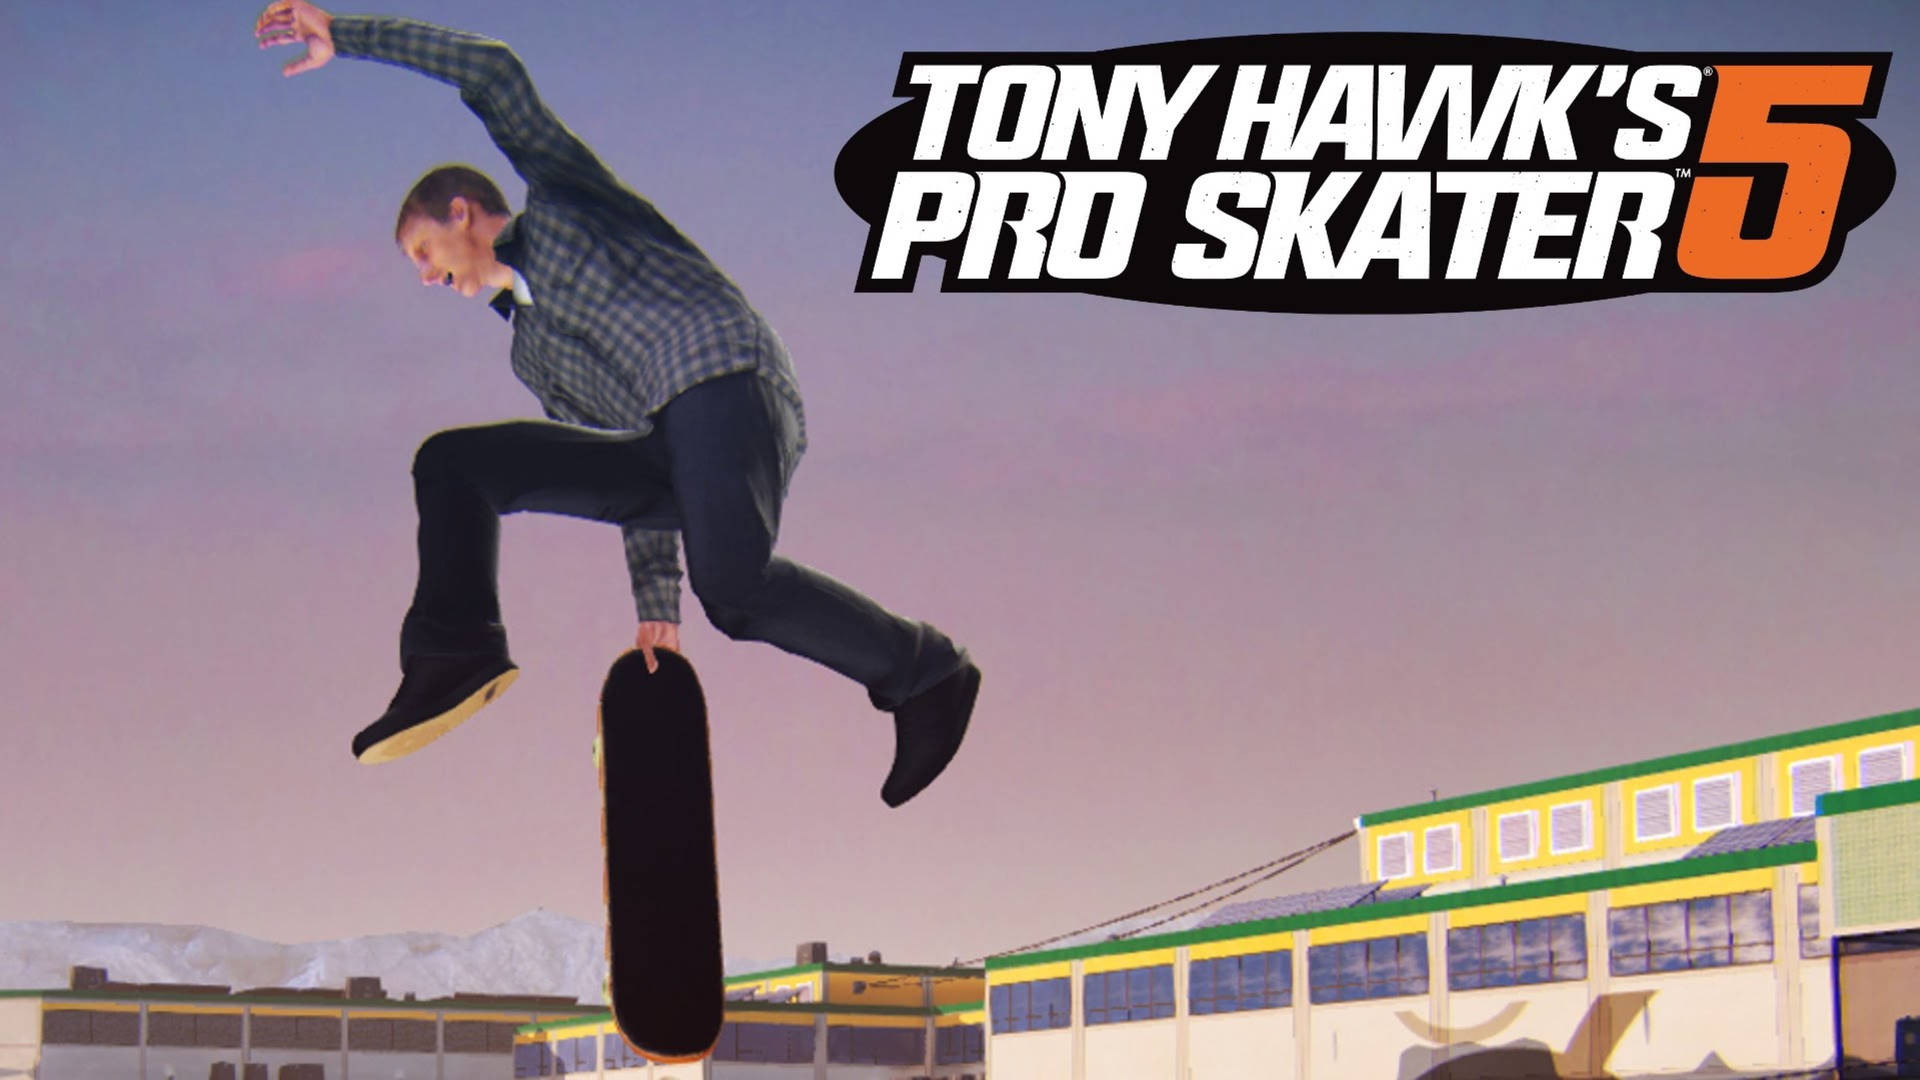 Tony Hawk Performing An Incredible Stunt on His Skateboard Wallpaper